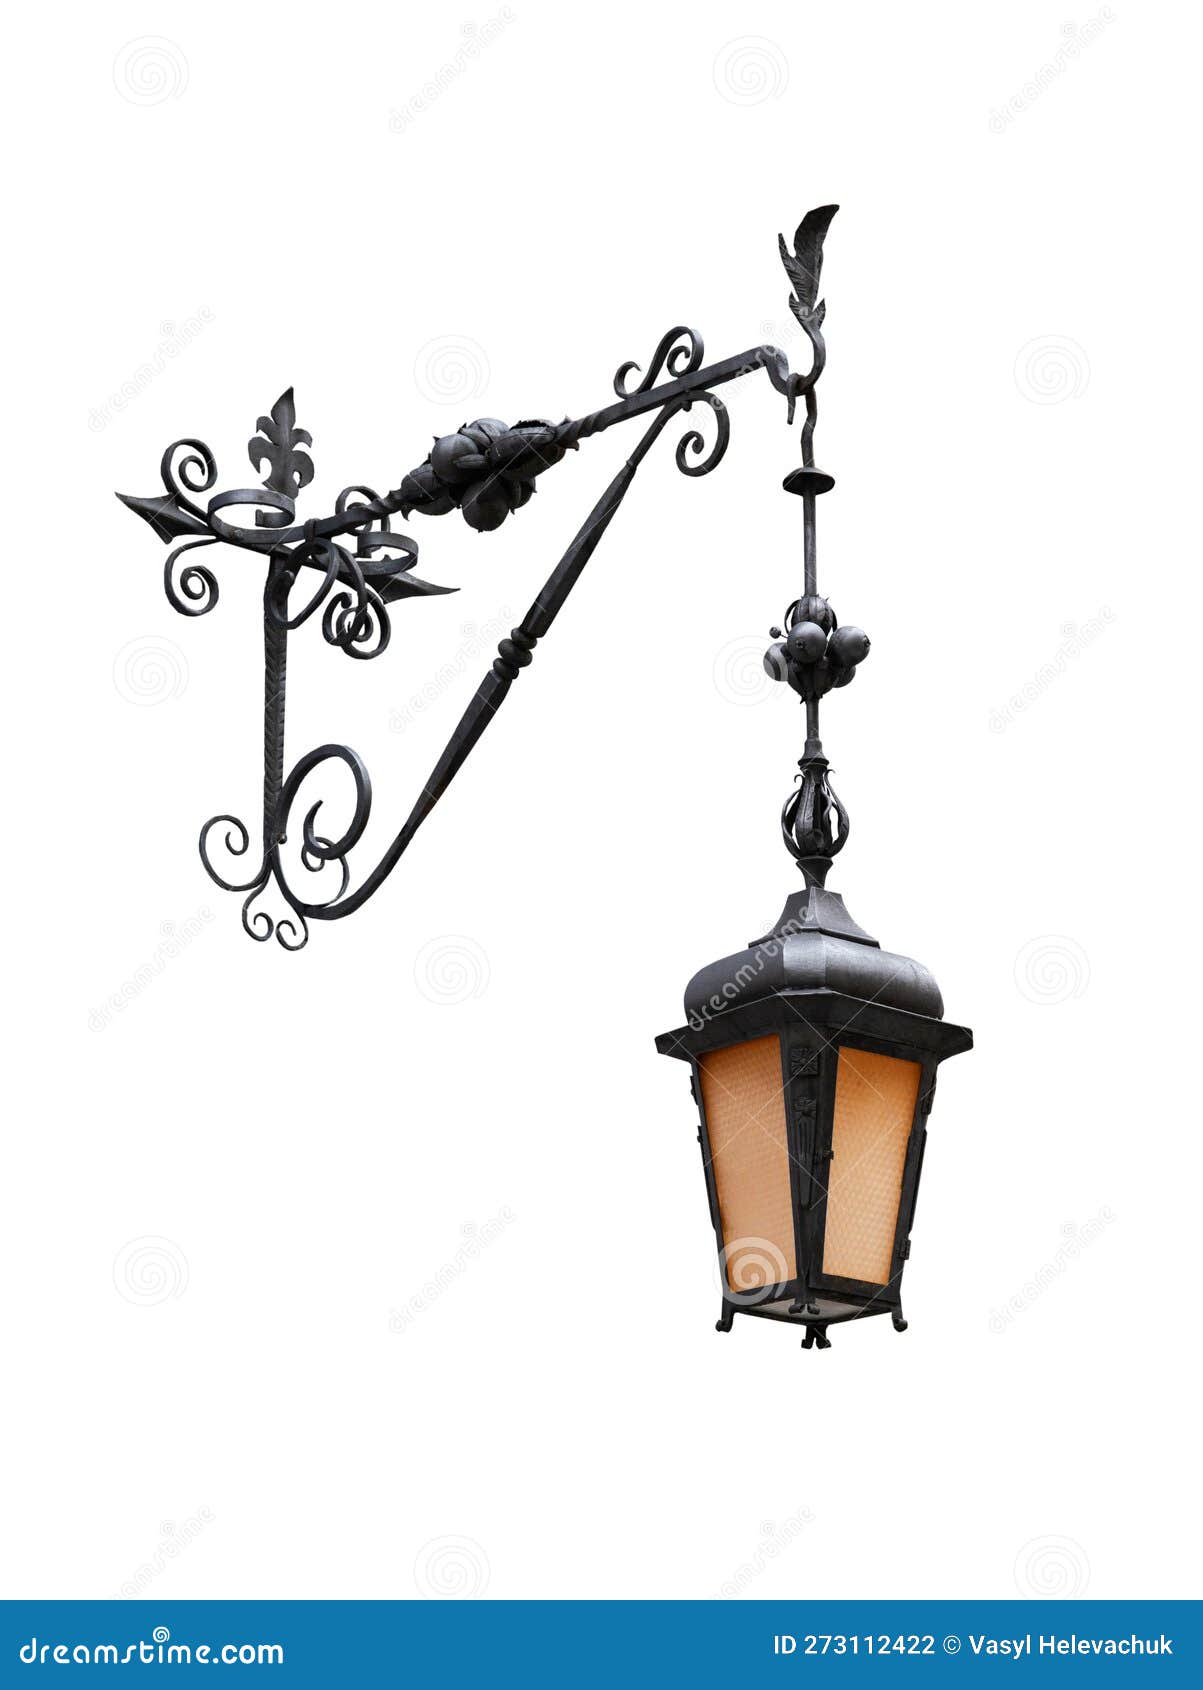 Vintage Street Night Lamp Isolated on White Stock Photo - Image of ...